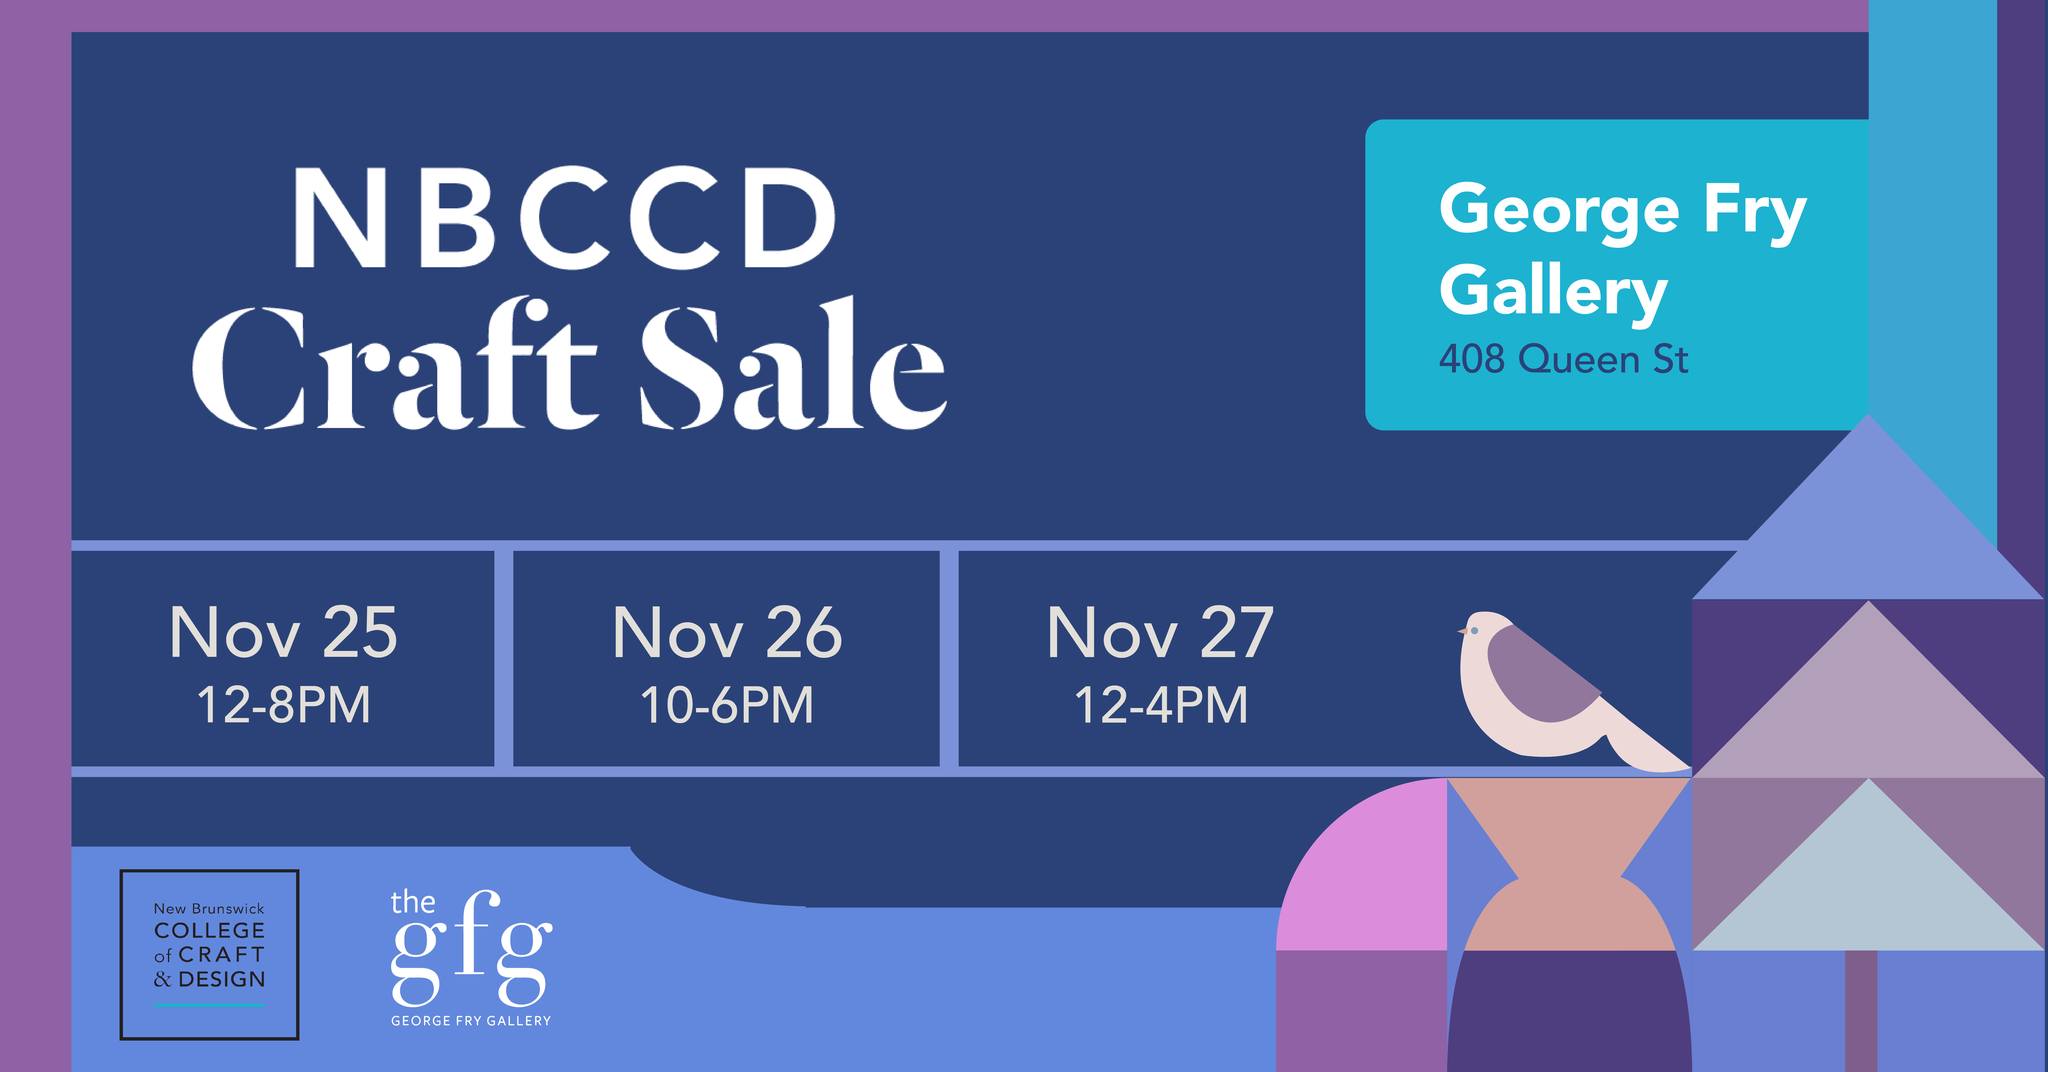 NBCCD Craft Sale. George Fry Gallery, 408 Queen St. Nov 25, 12-8 pm; Nov 26, 10-6pm; Nov 27, 12-4pm.